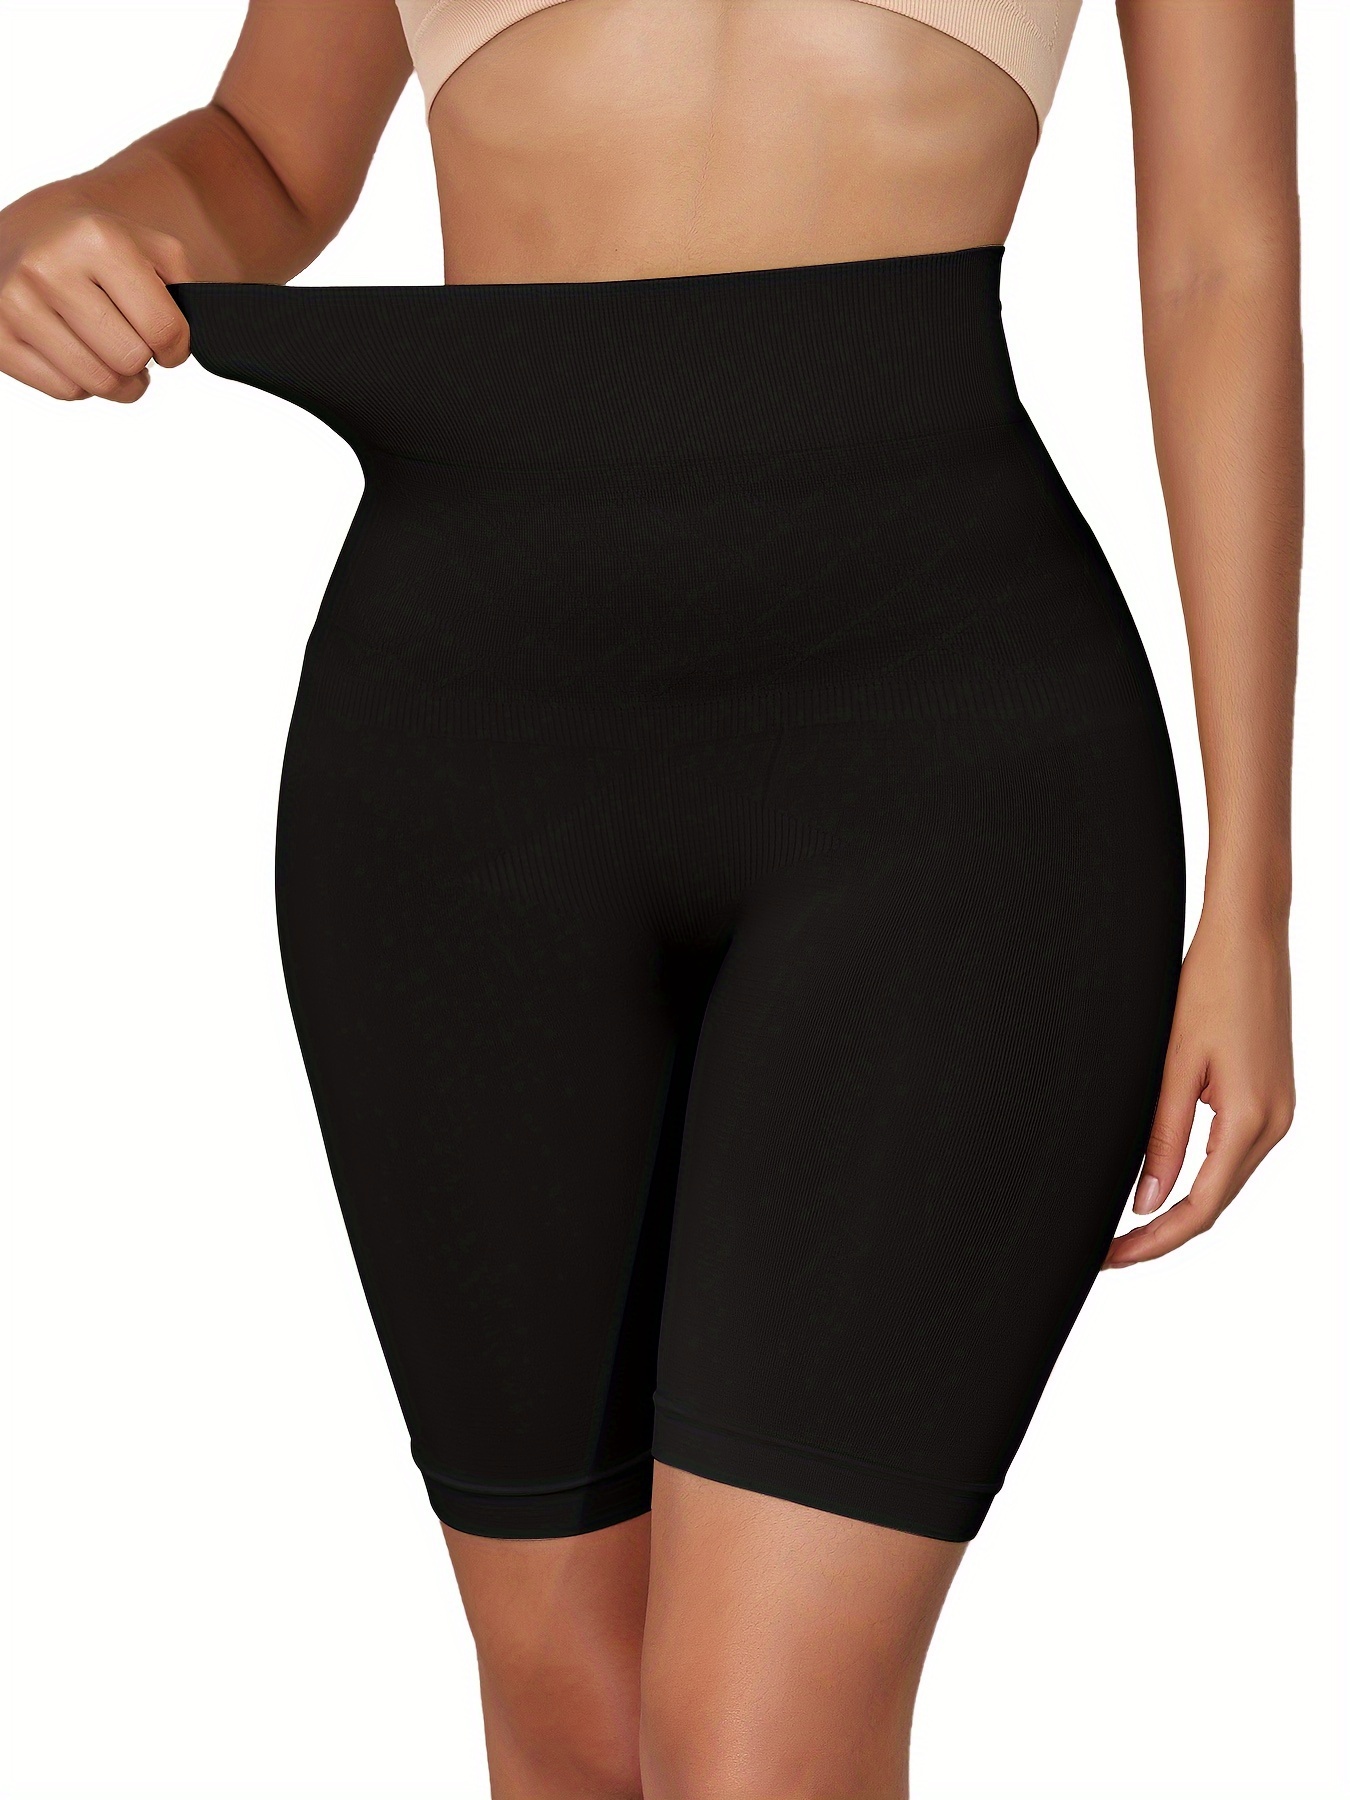 Scarboro Lace Tummy Control Shapewear Shorts High Waist Body